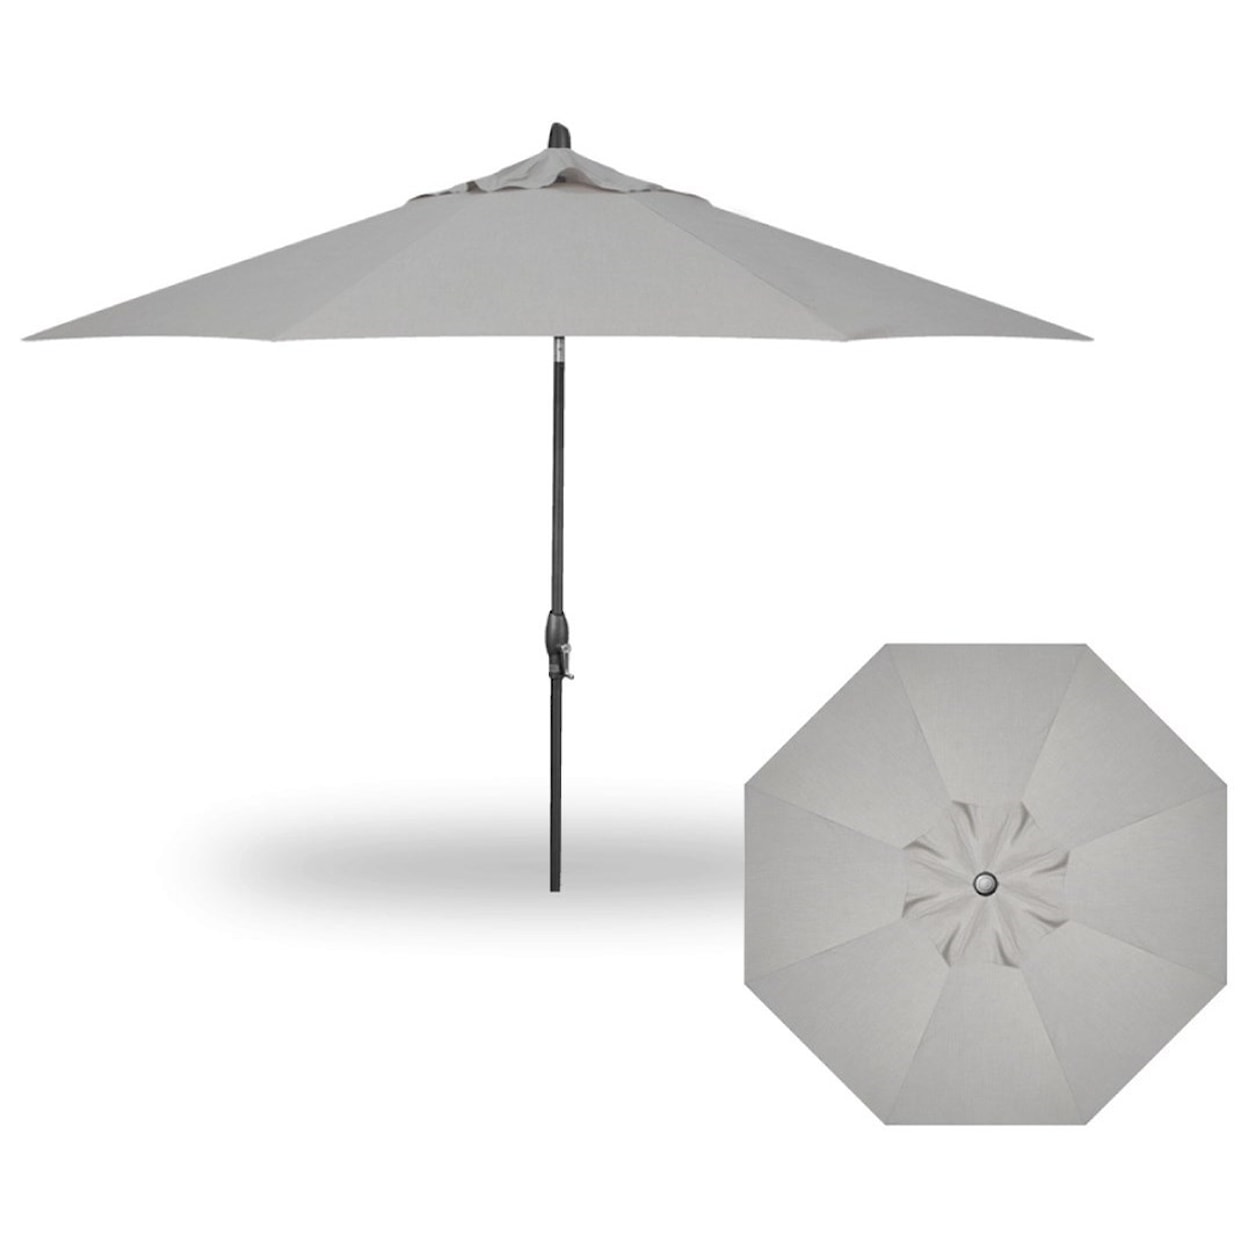 Treasure Garden Market Umbrellas 11' Auto Tilt Market Umbrella